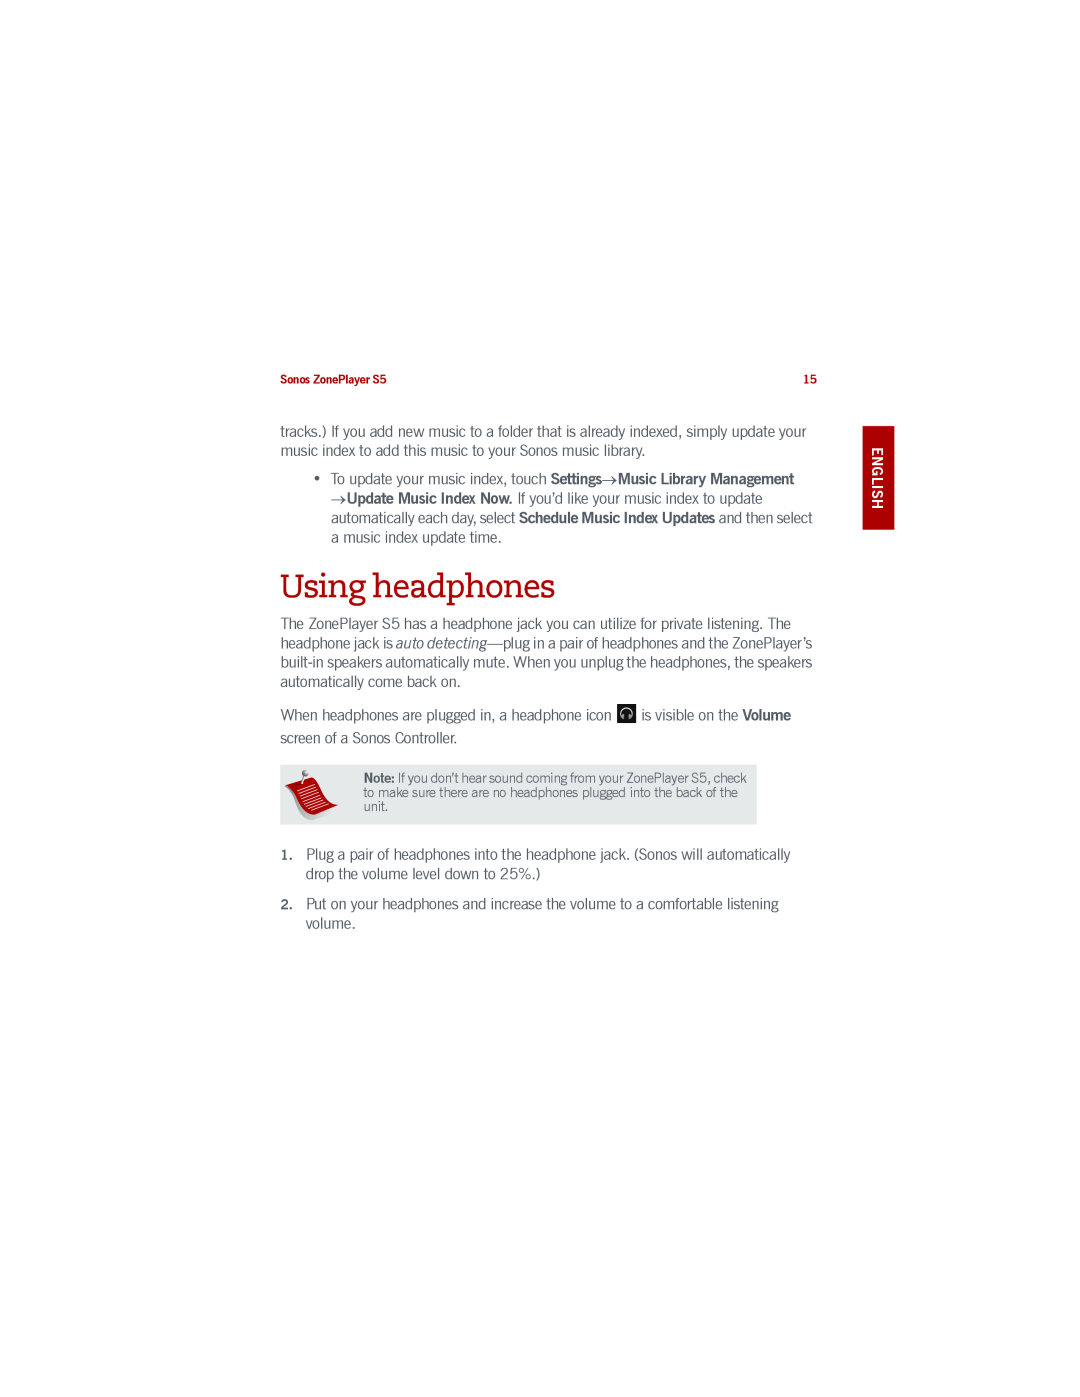 Sonos manual Using headphones, Sonos ZonePlayer S5 